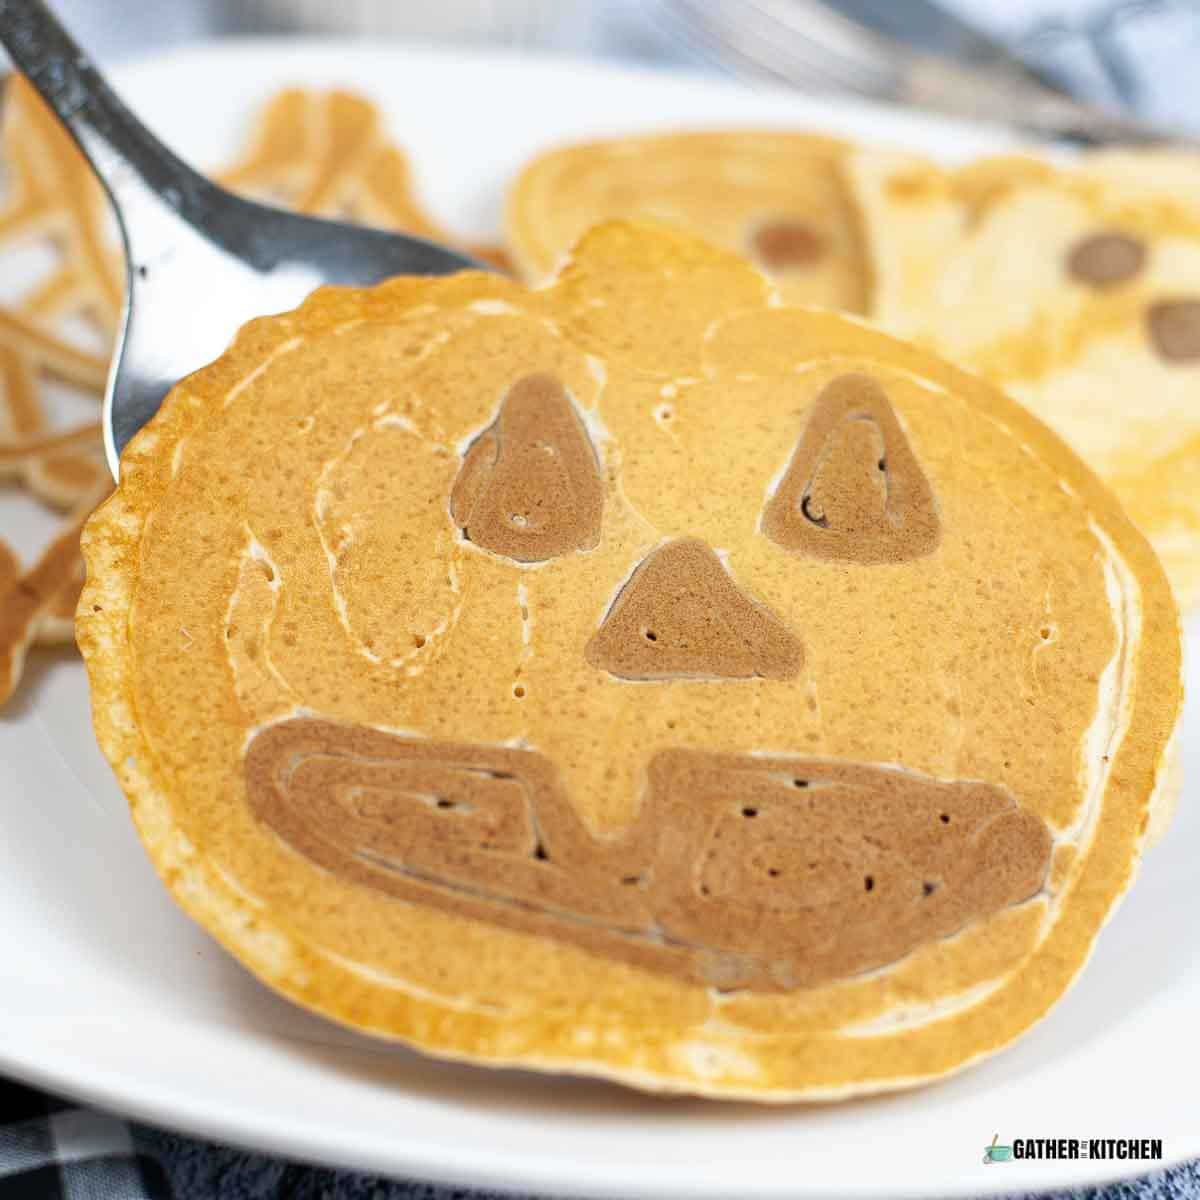 https://gatherinmykitchen.com/wp-content/uploads/2021/09/Halloween-Pancakes.jpg